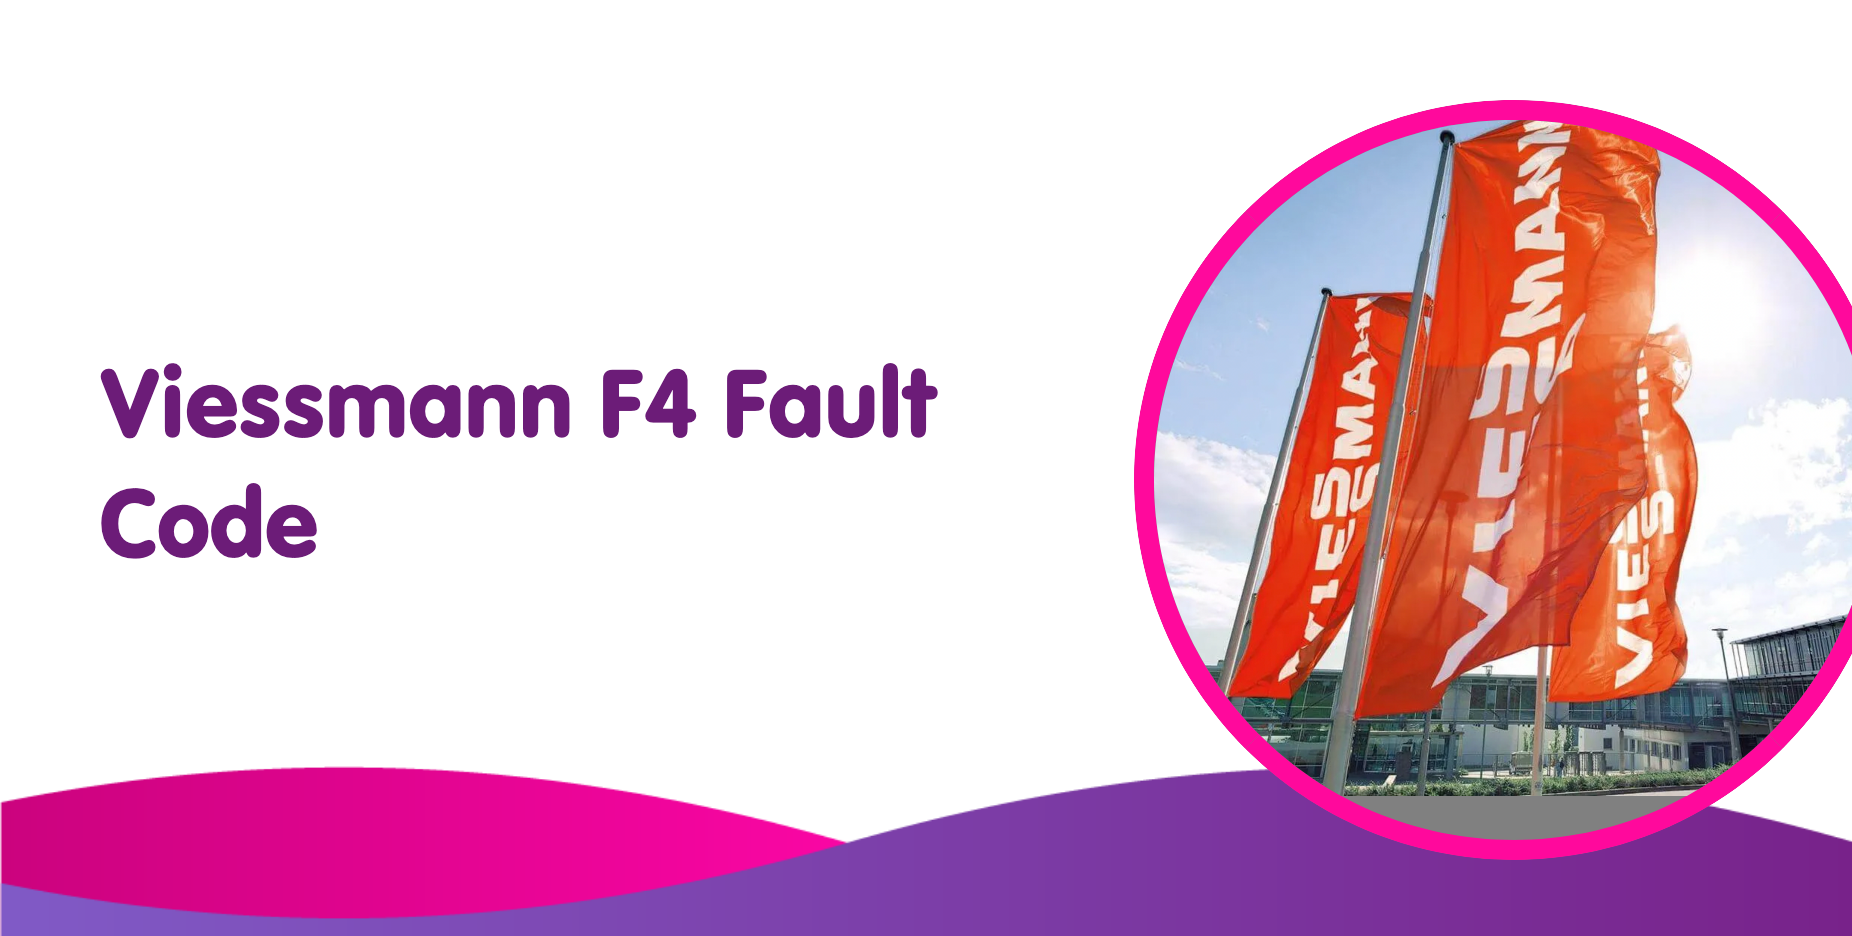 viessmann f4 fault code